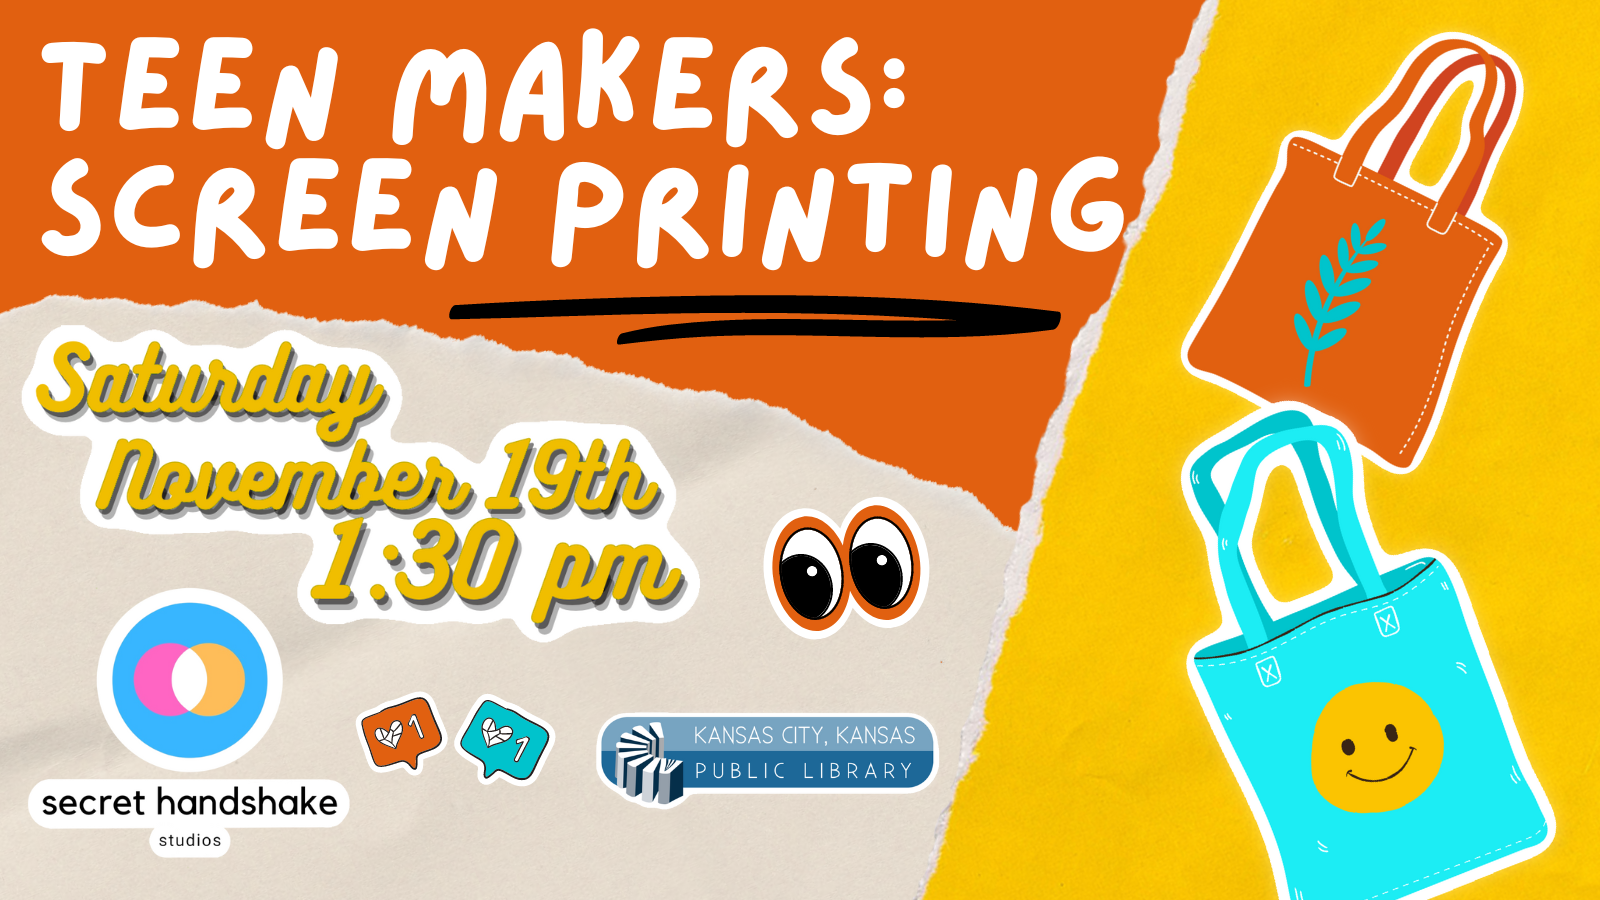 Teen makers: screen printing. cartoon totebags pictured. 